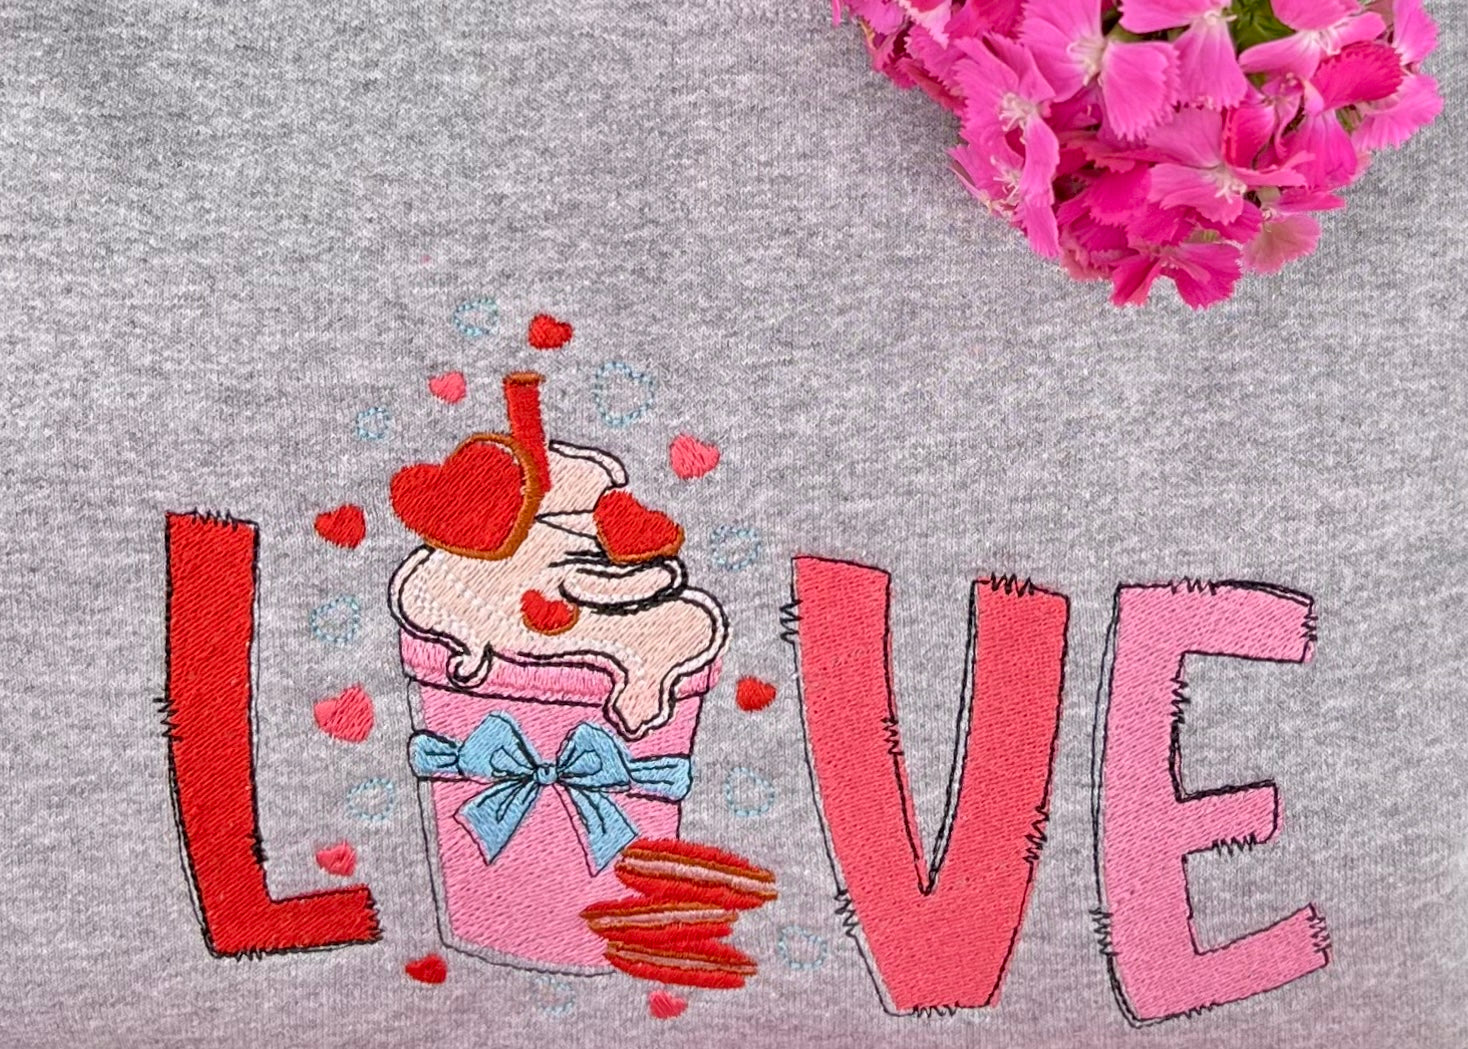 Love Decorative Valentine Embroidered Sweatshirt